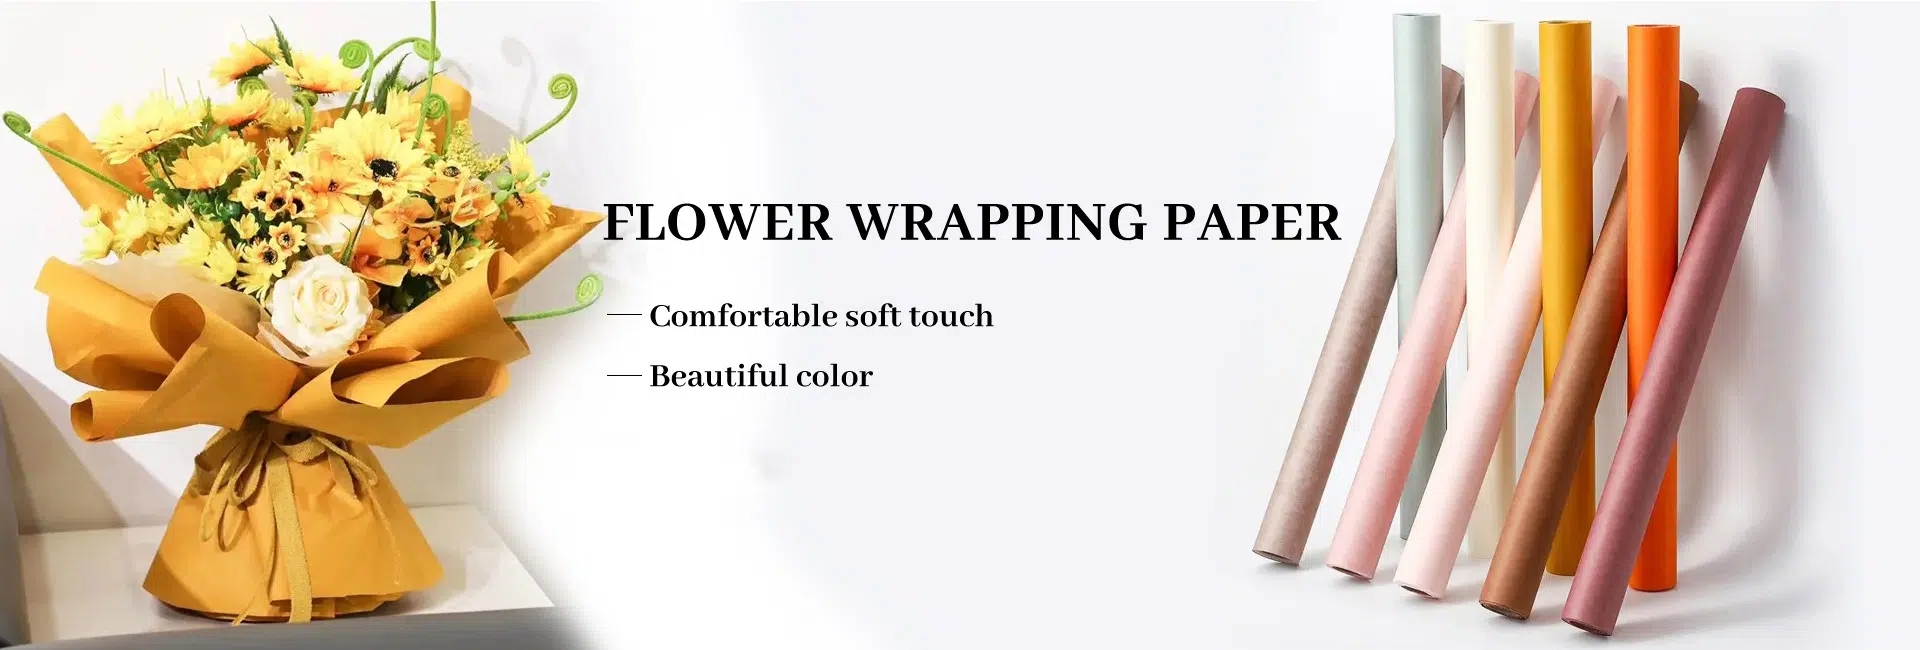 flower-wrapping-paper-1.jpg.webp